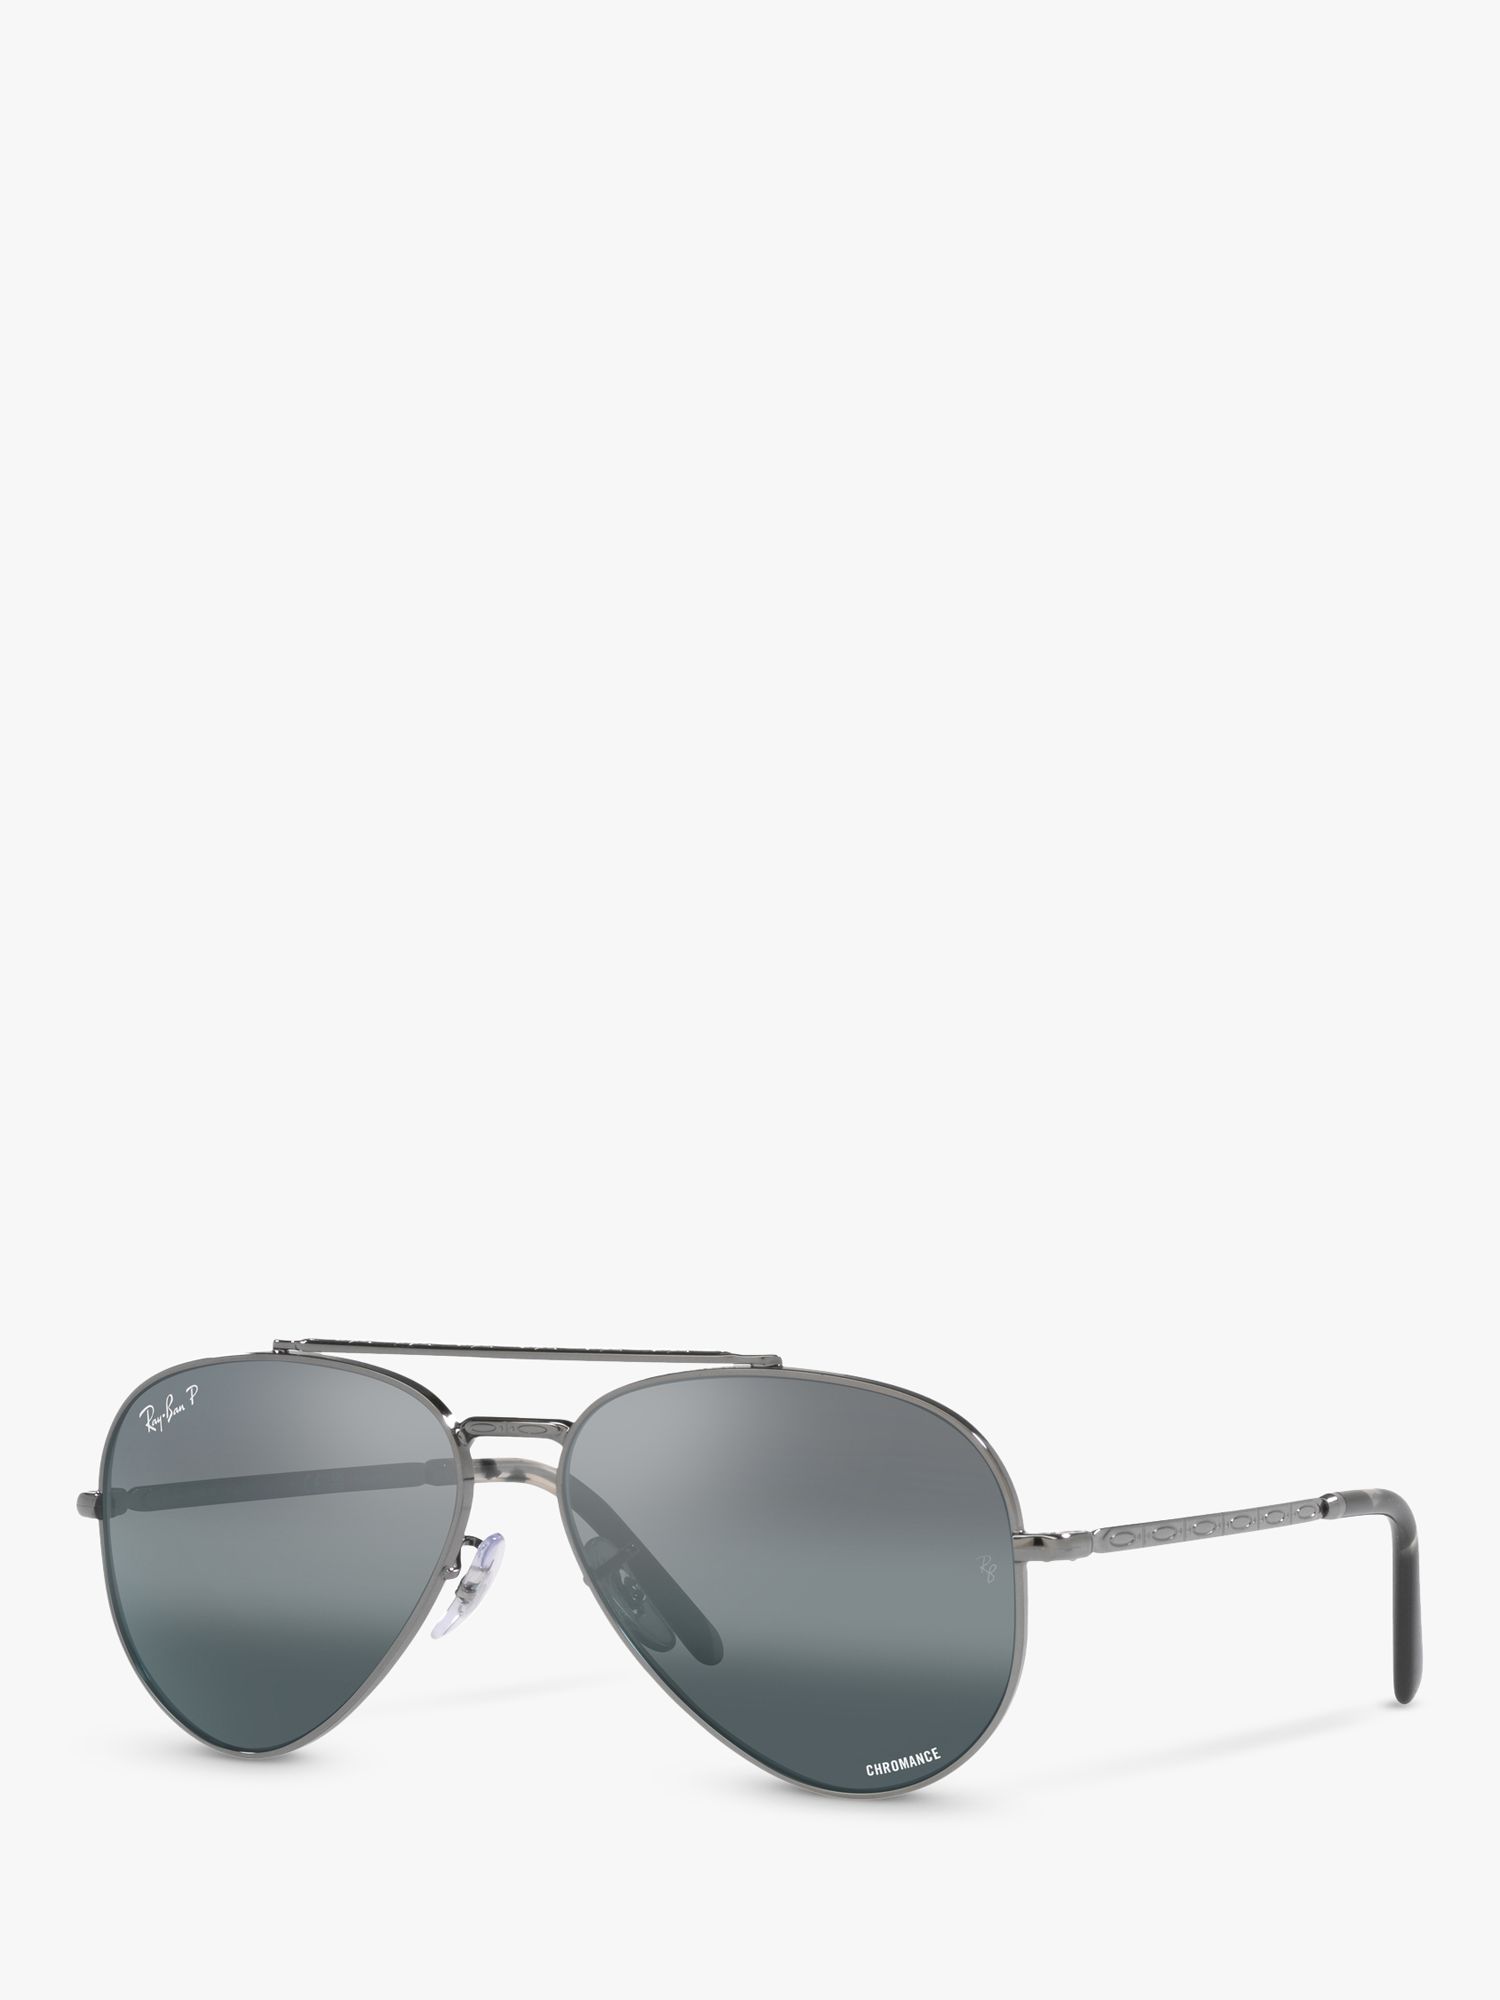 Ray-Ban RB3625 Unisex Polarised Aviator Sunglasses, Gunmetal/Mirror Grey at  John Lewis & Partners